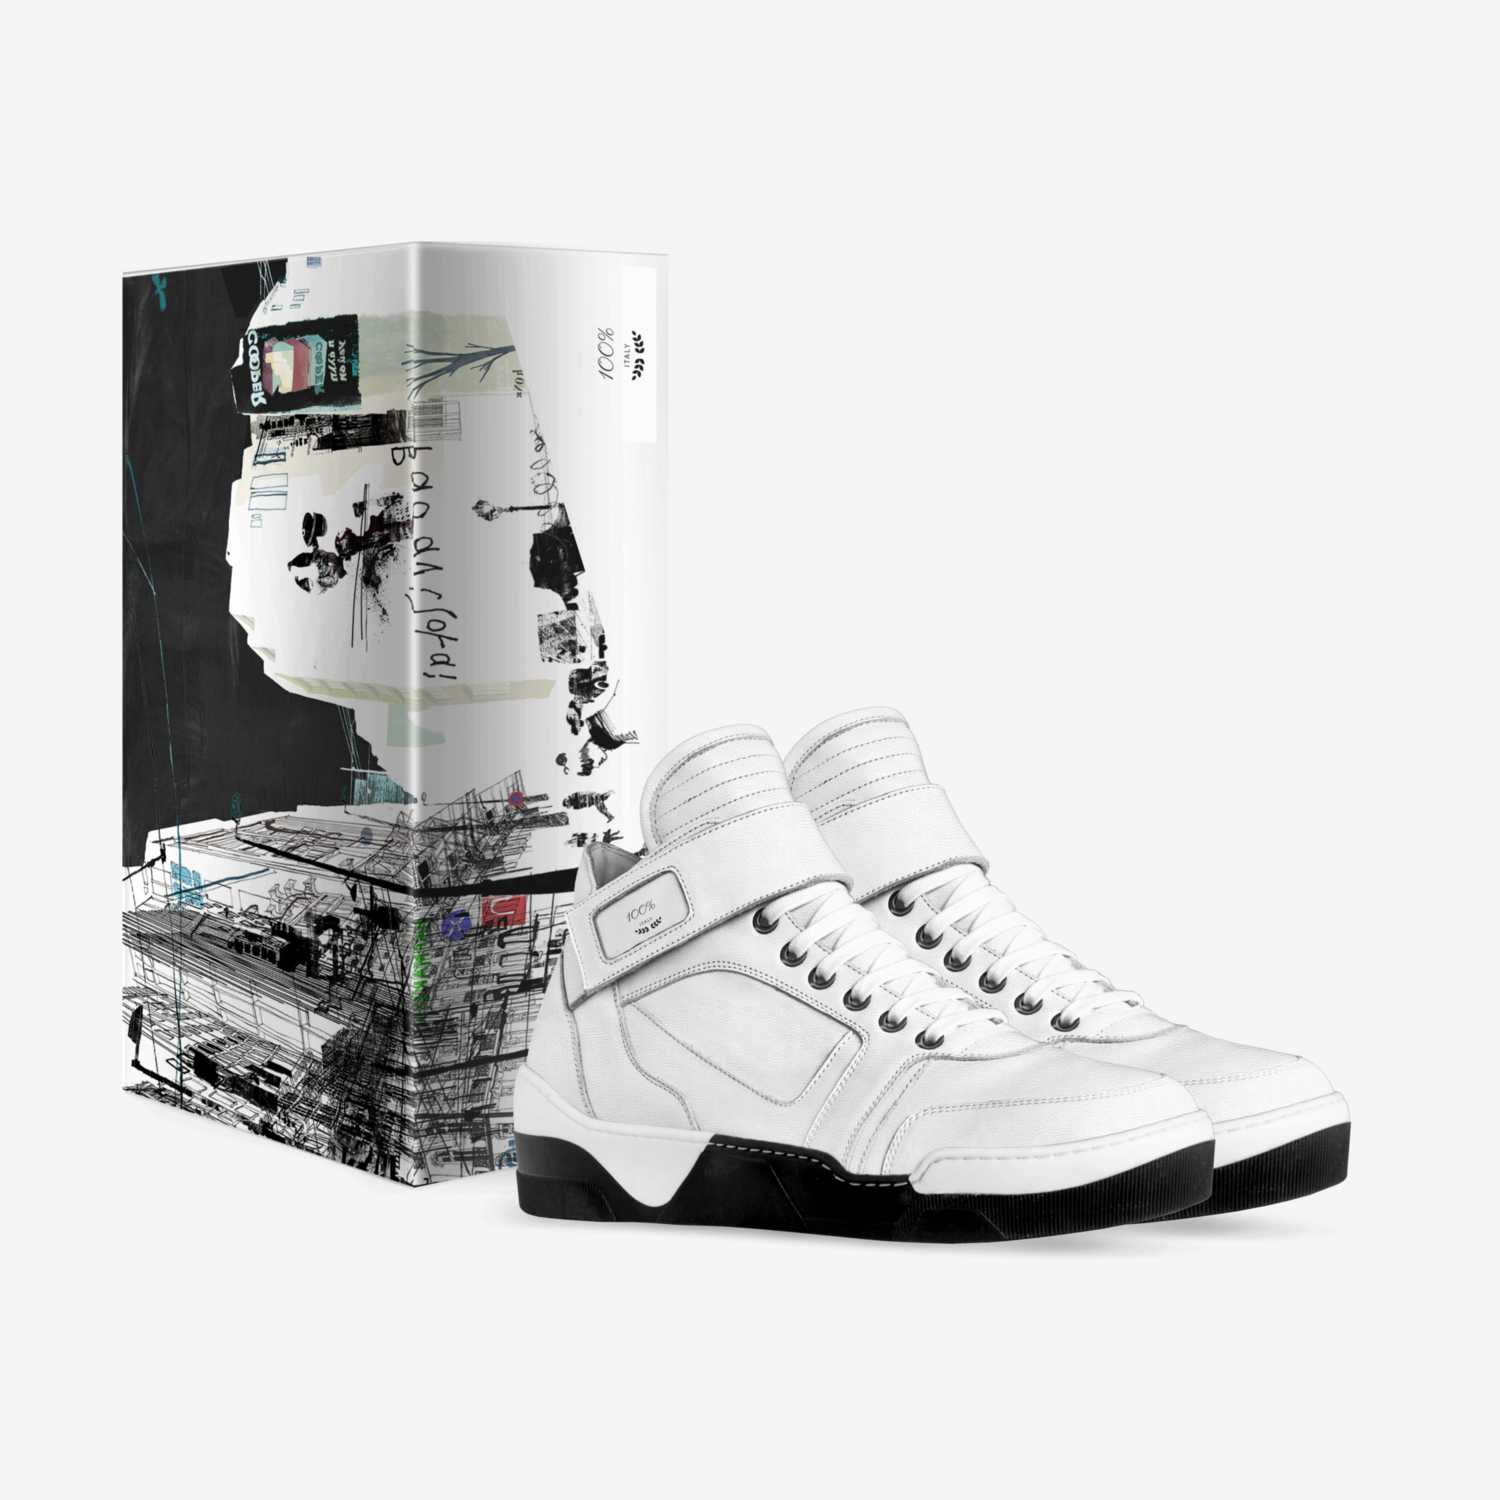 100% custom made in Italy shoes by Moffatt Gordon | Box view